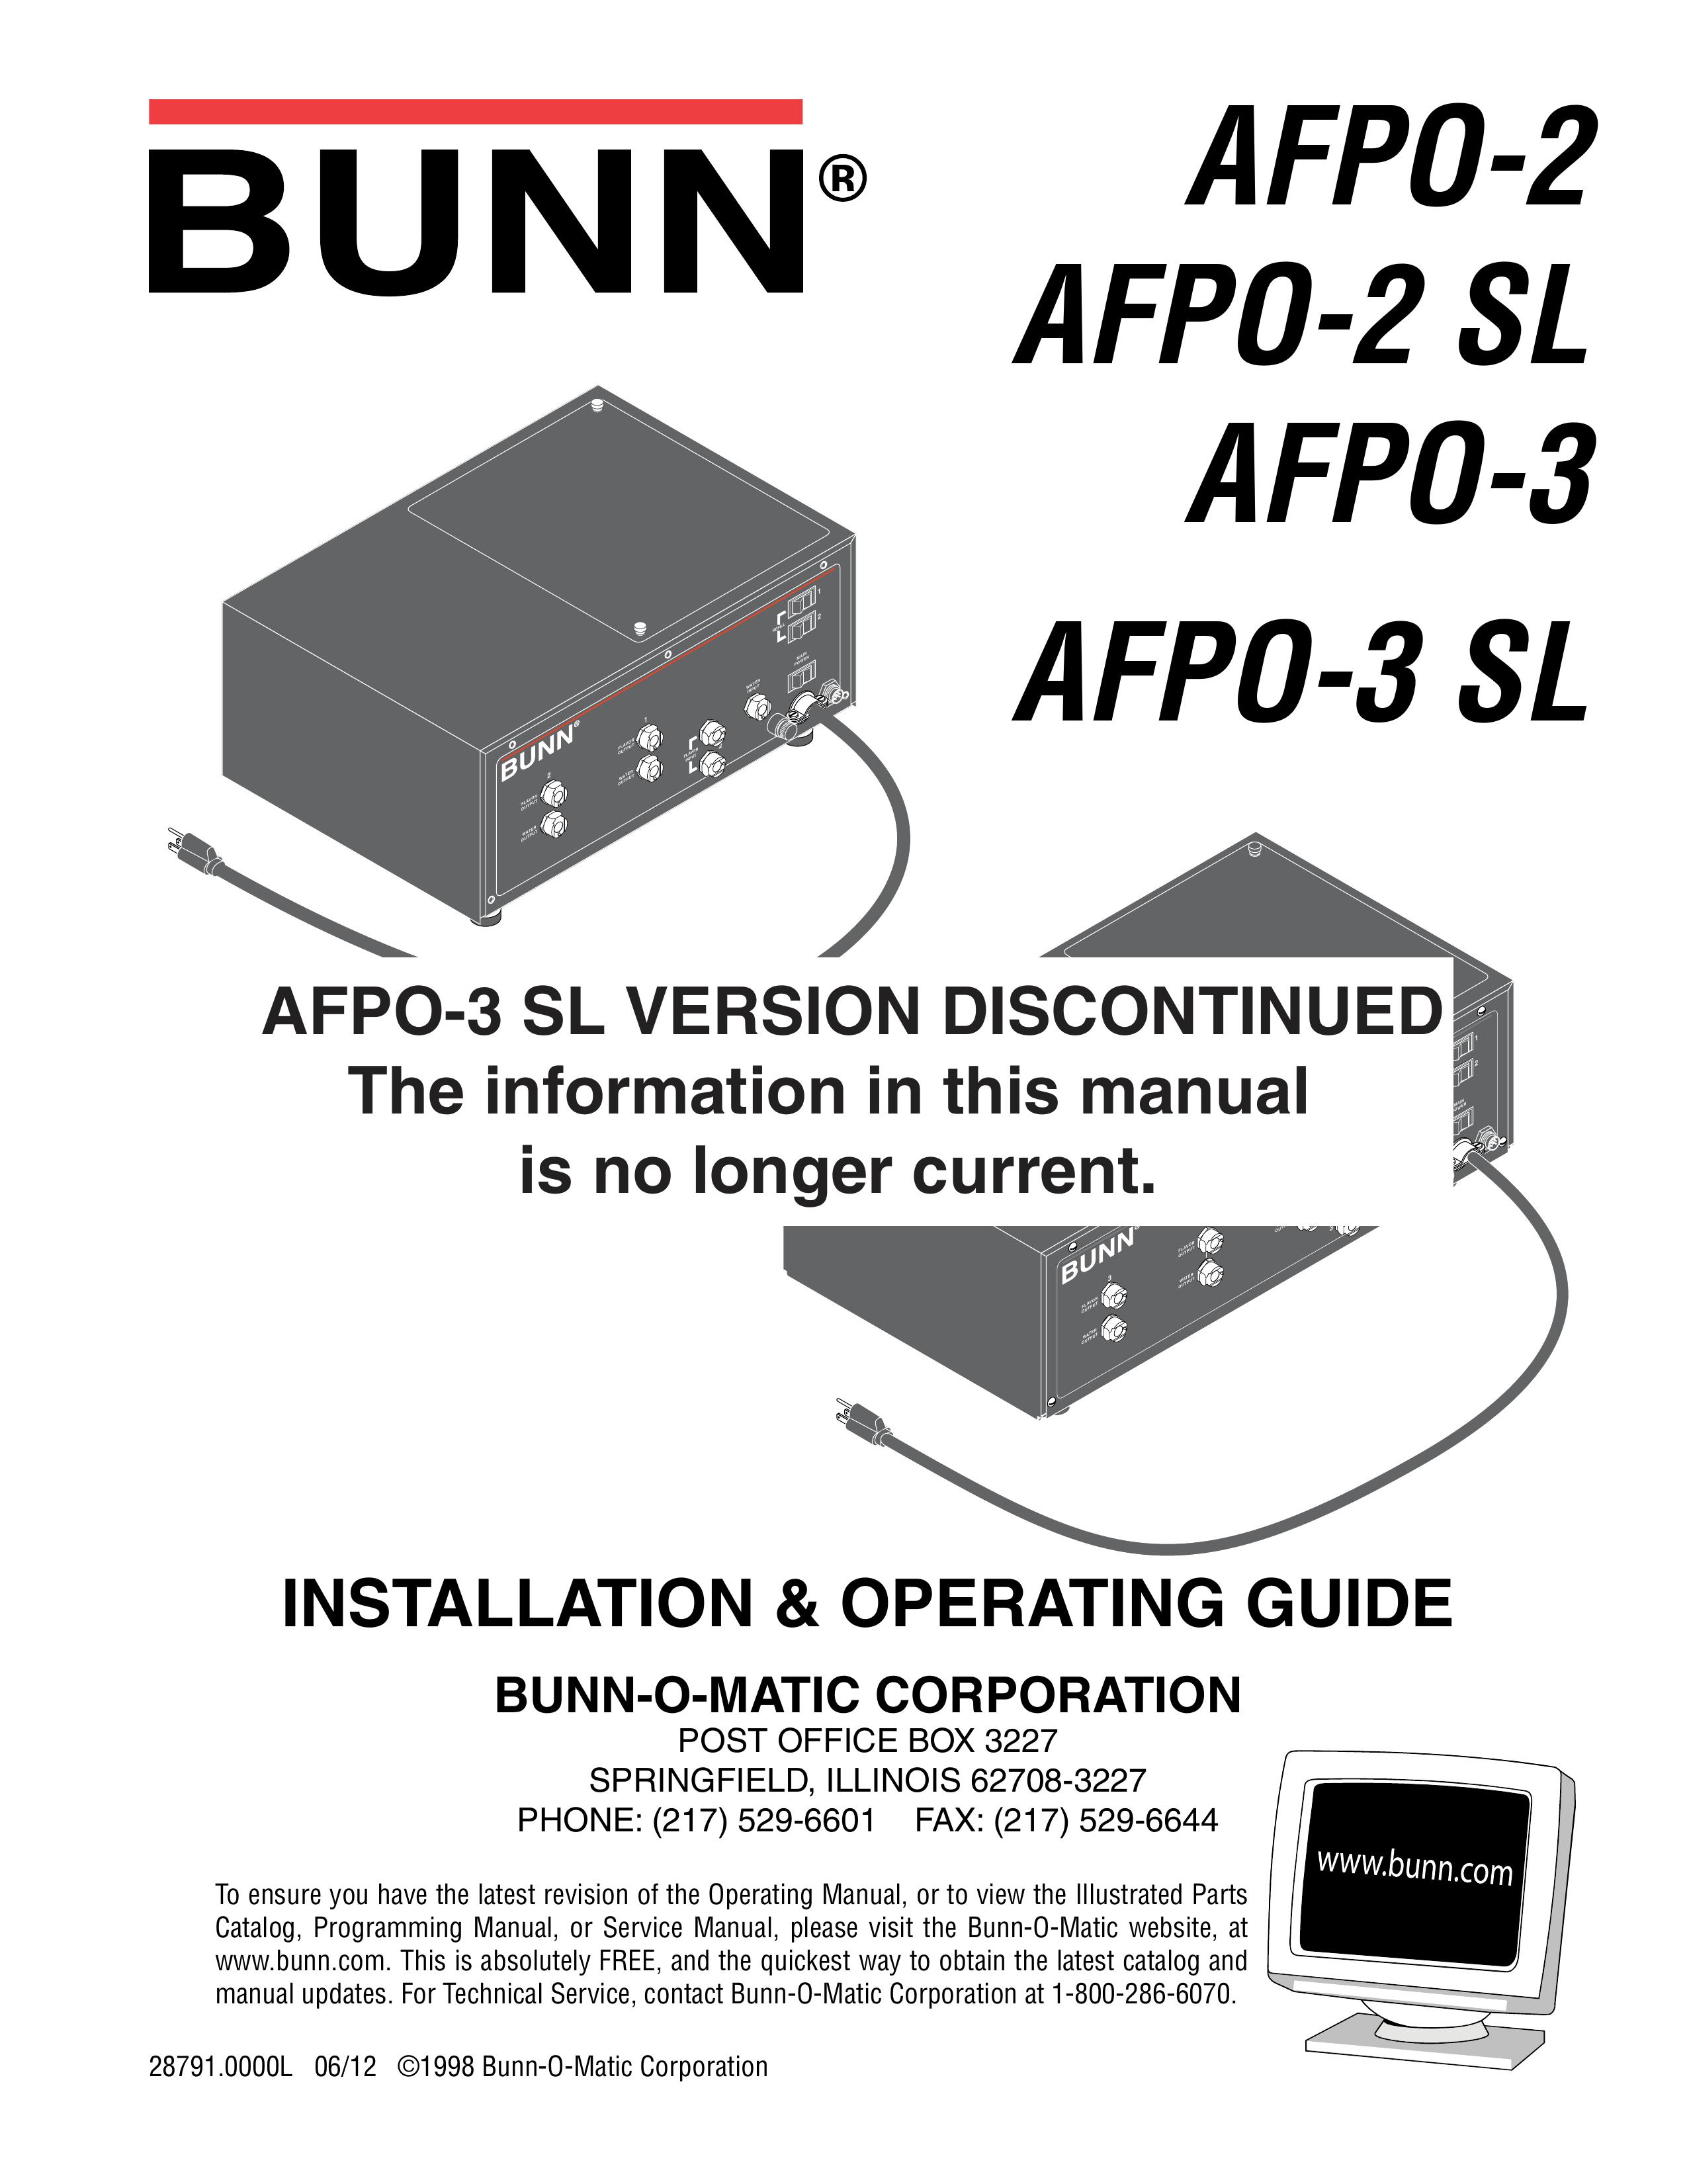 Bunn AFPO-2 SL Water Dispenser User Manual